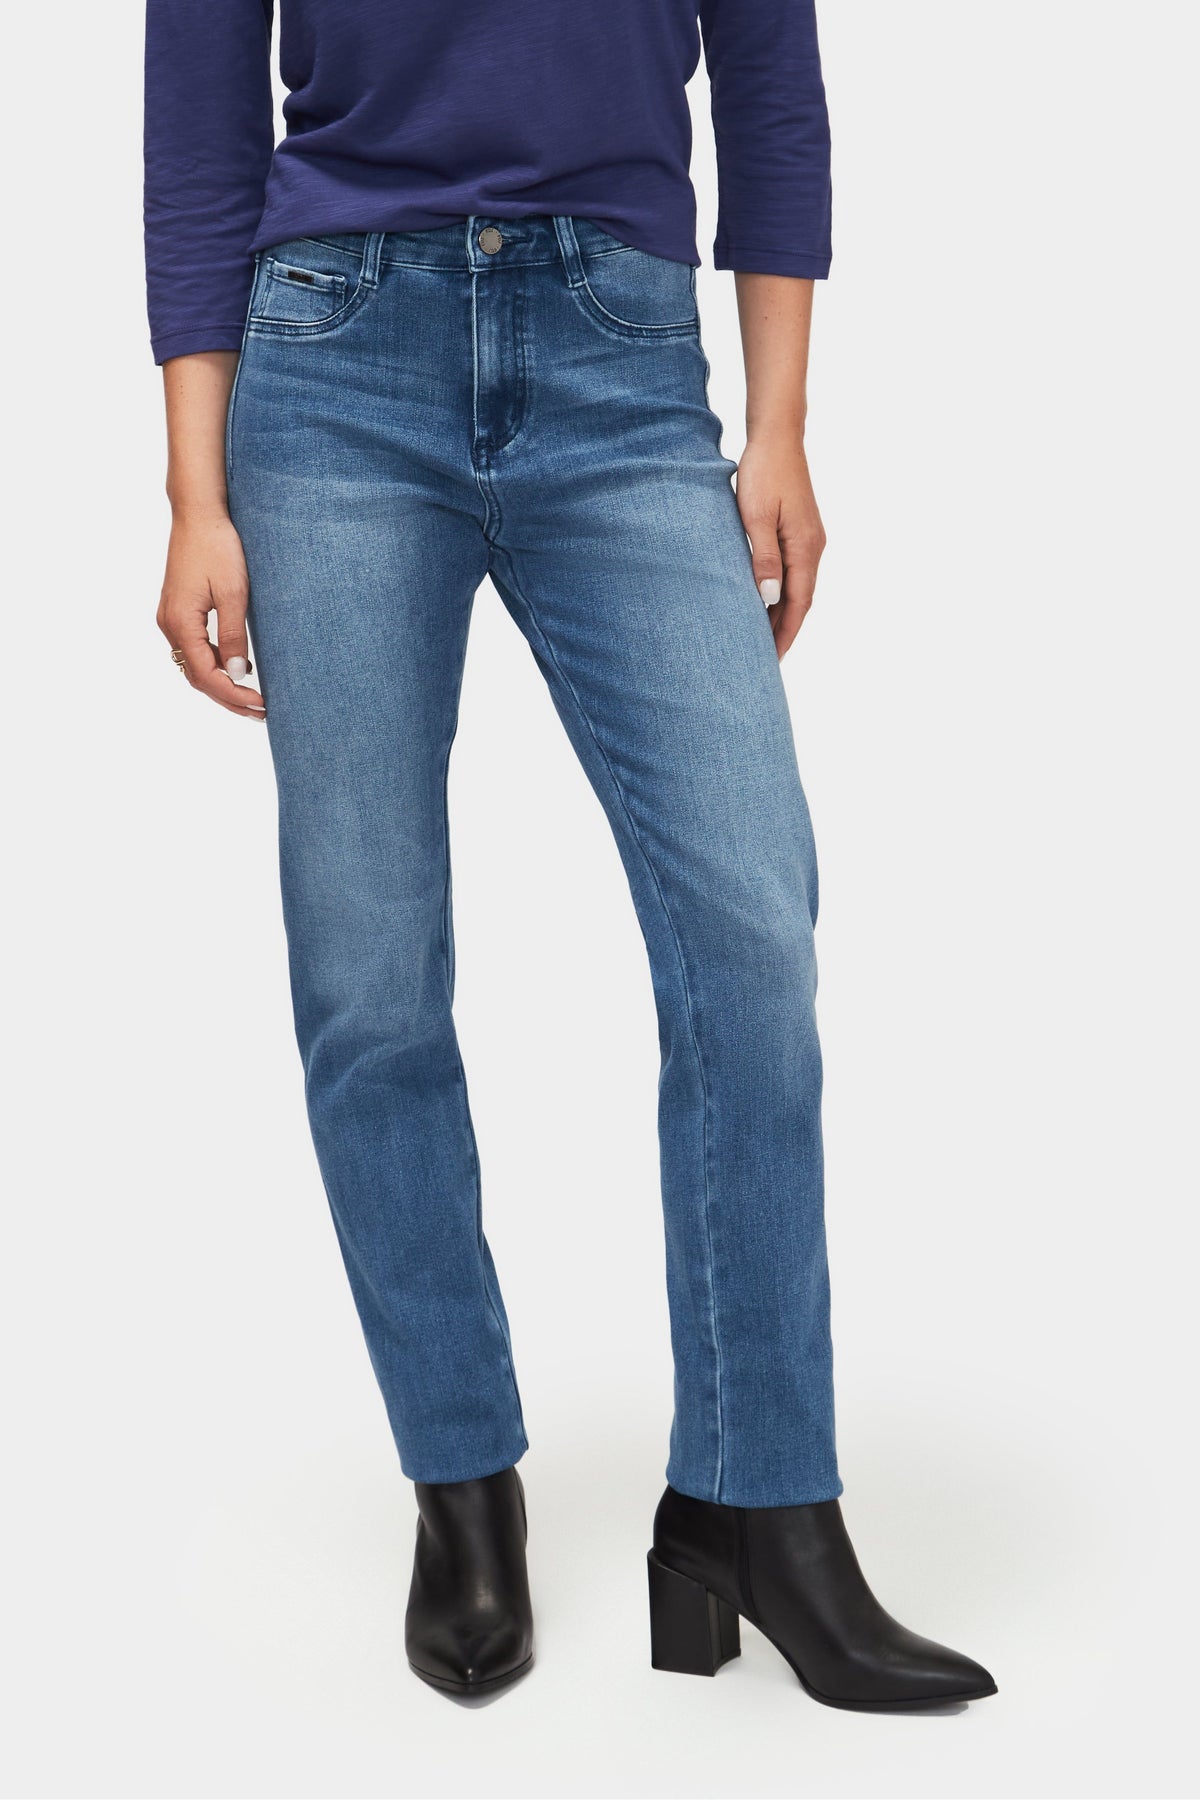 Buy HAU Thermal Fleece Denim Jeggings - Women's Denim Print Fake Jeans  Seamless Fleece Lined Leggings, Full Length (Blue, L) at